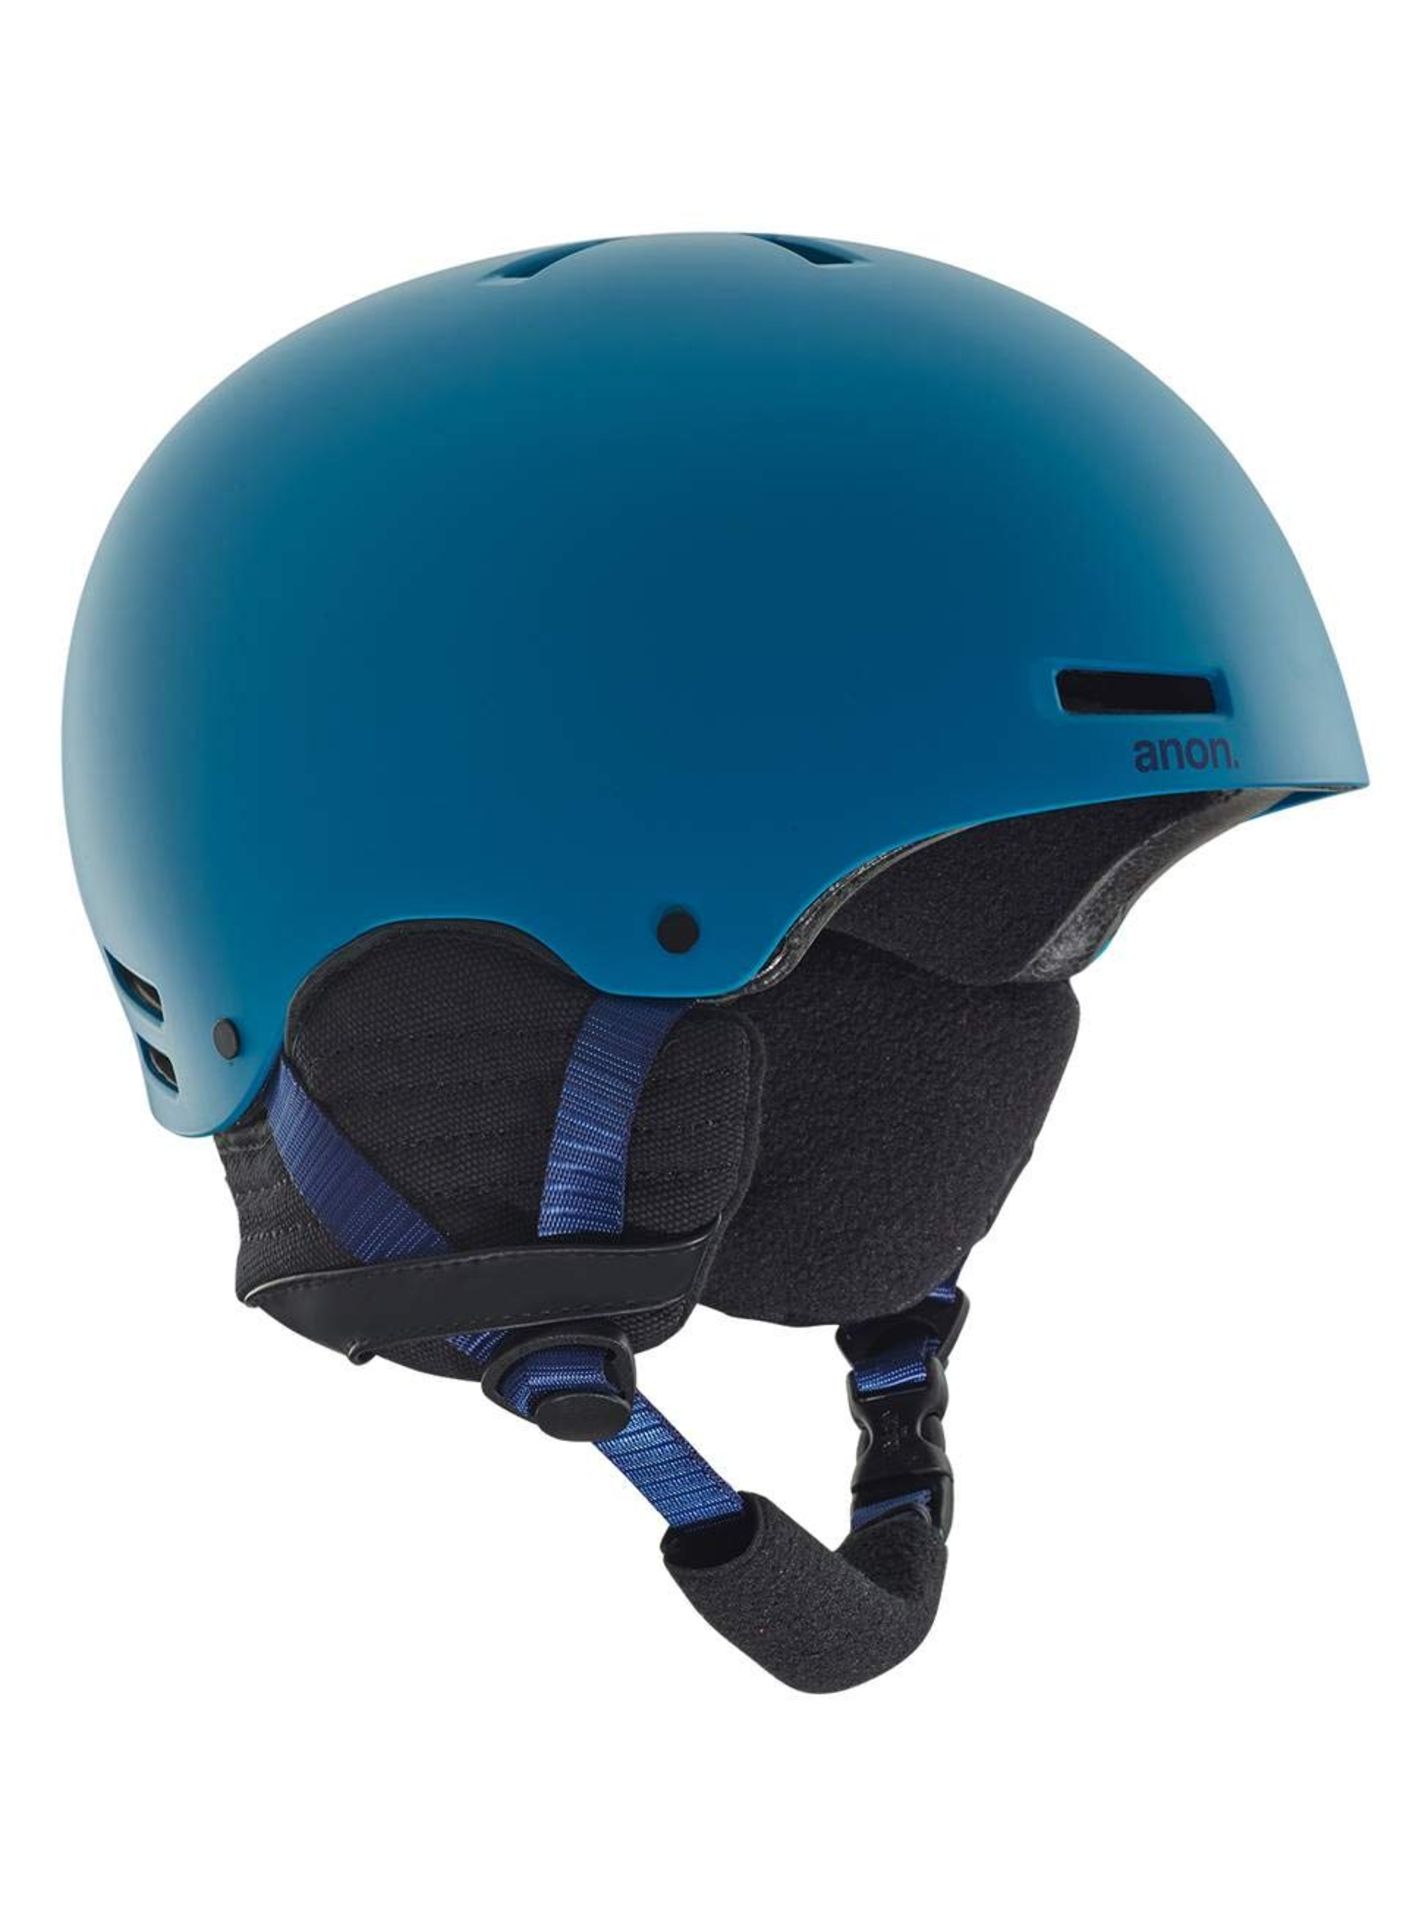 Anon Raider Men's Snowboard Helmet, Men, Blue, S